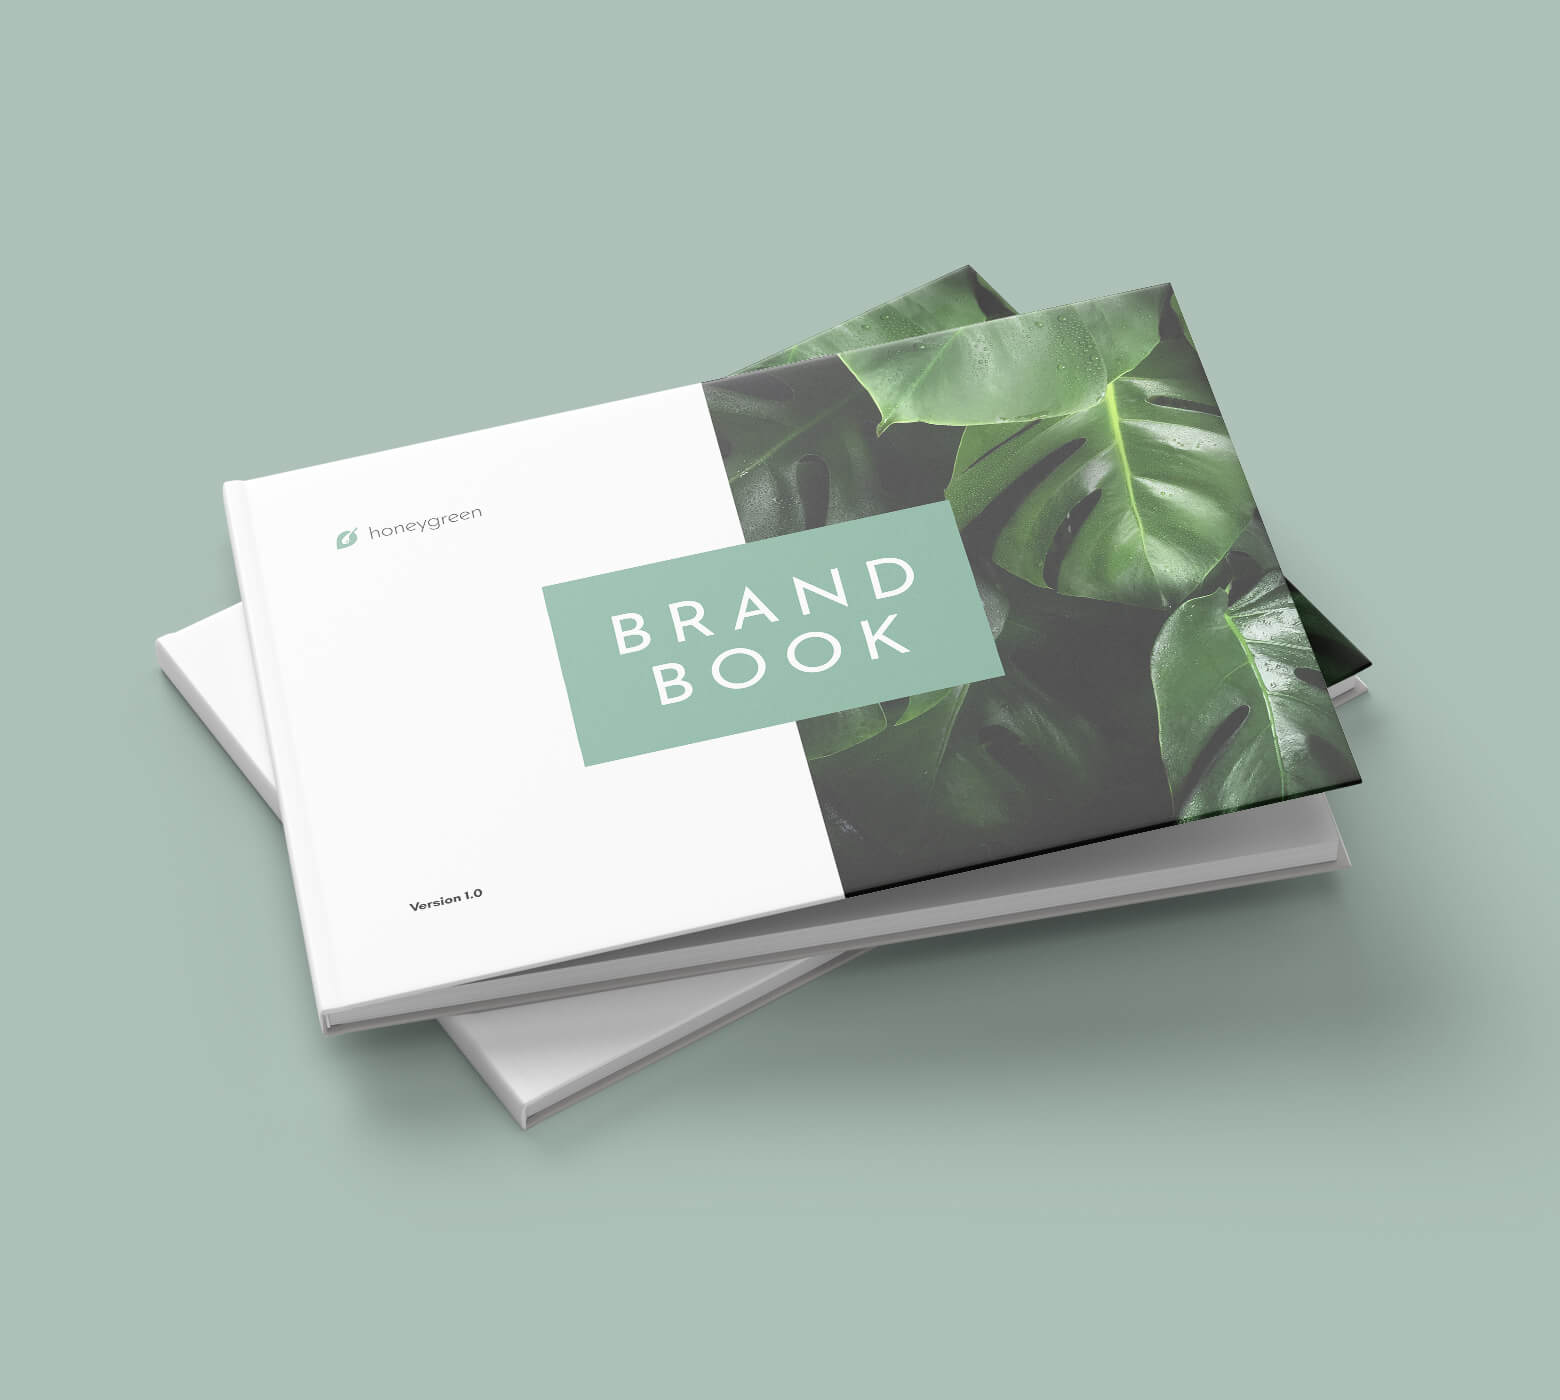 Honeygreen brandbook